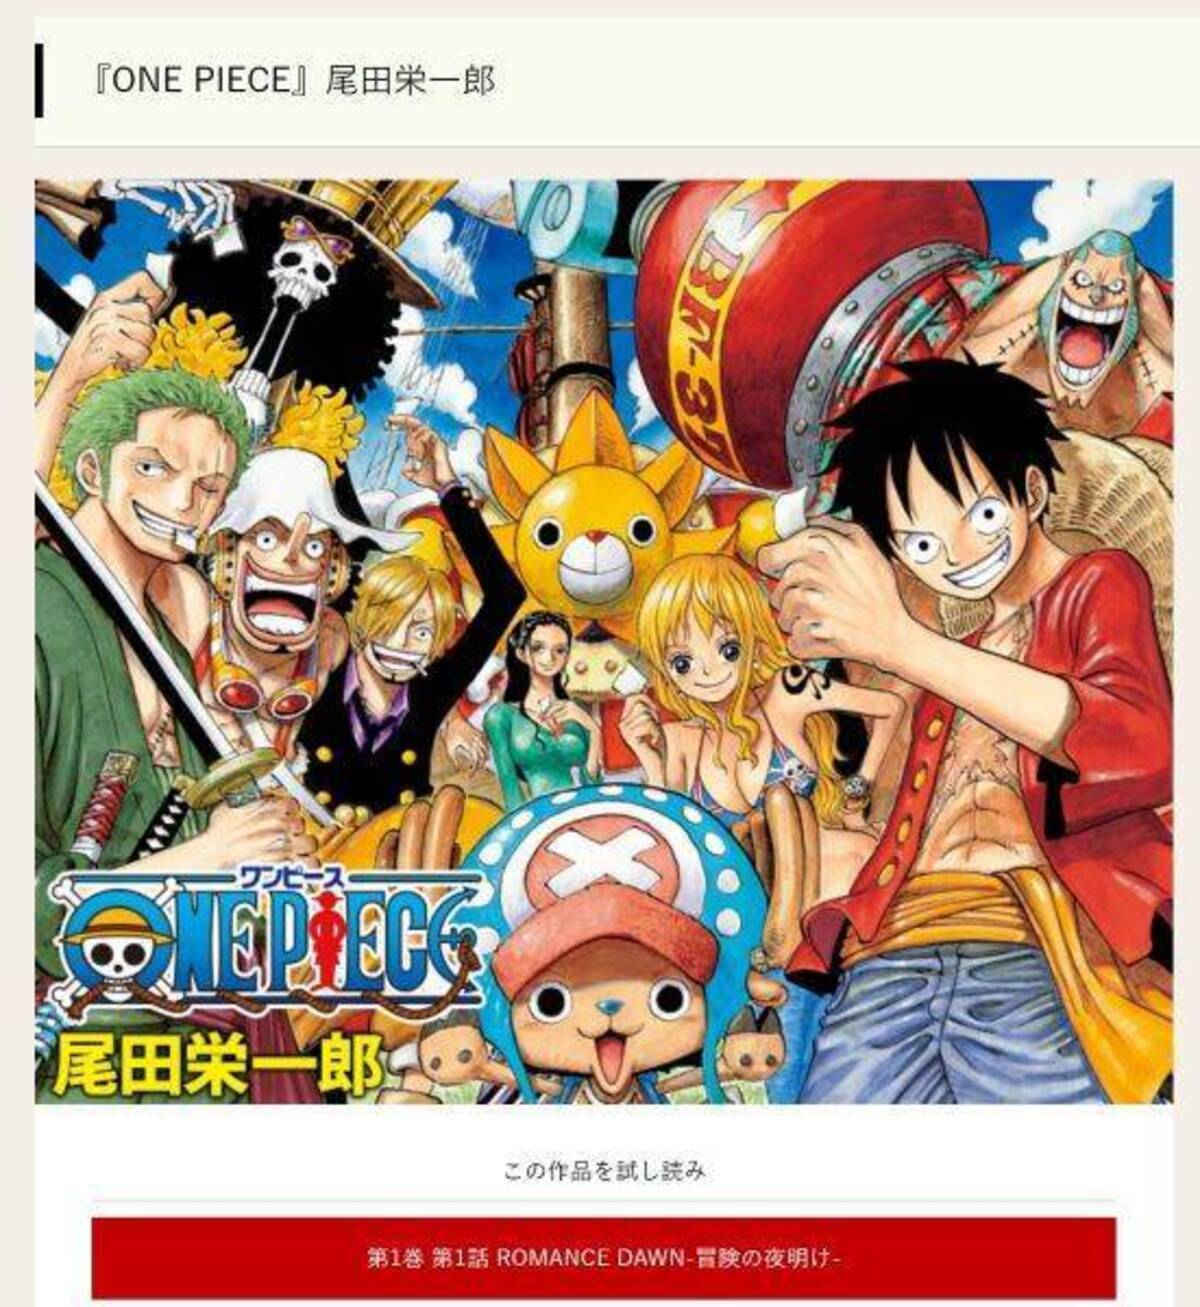 One Piece 最終章 全ては空白の100年に繋がる 謎を解き明かす４つの要素 22年7月24日 エキサイトニュース 3 8